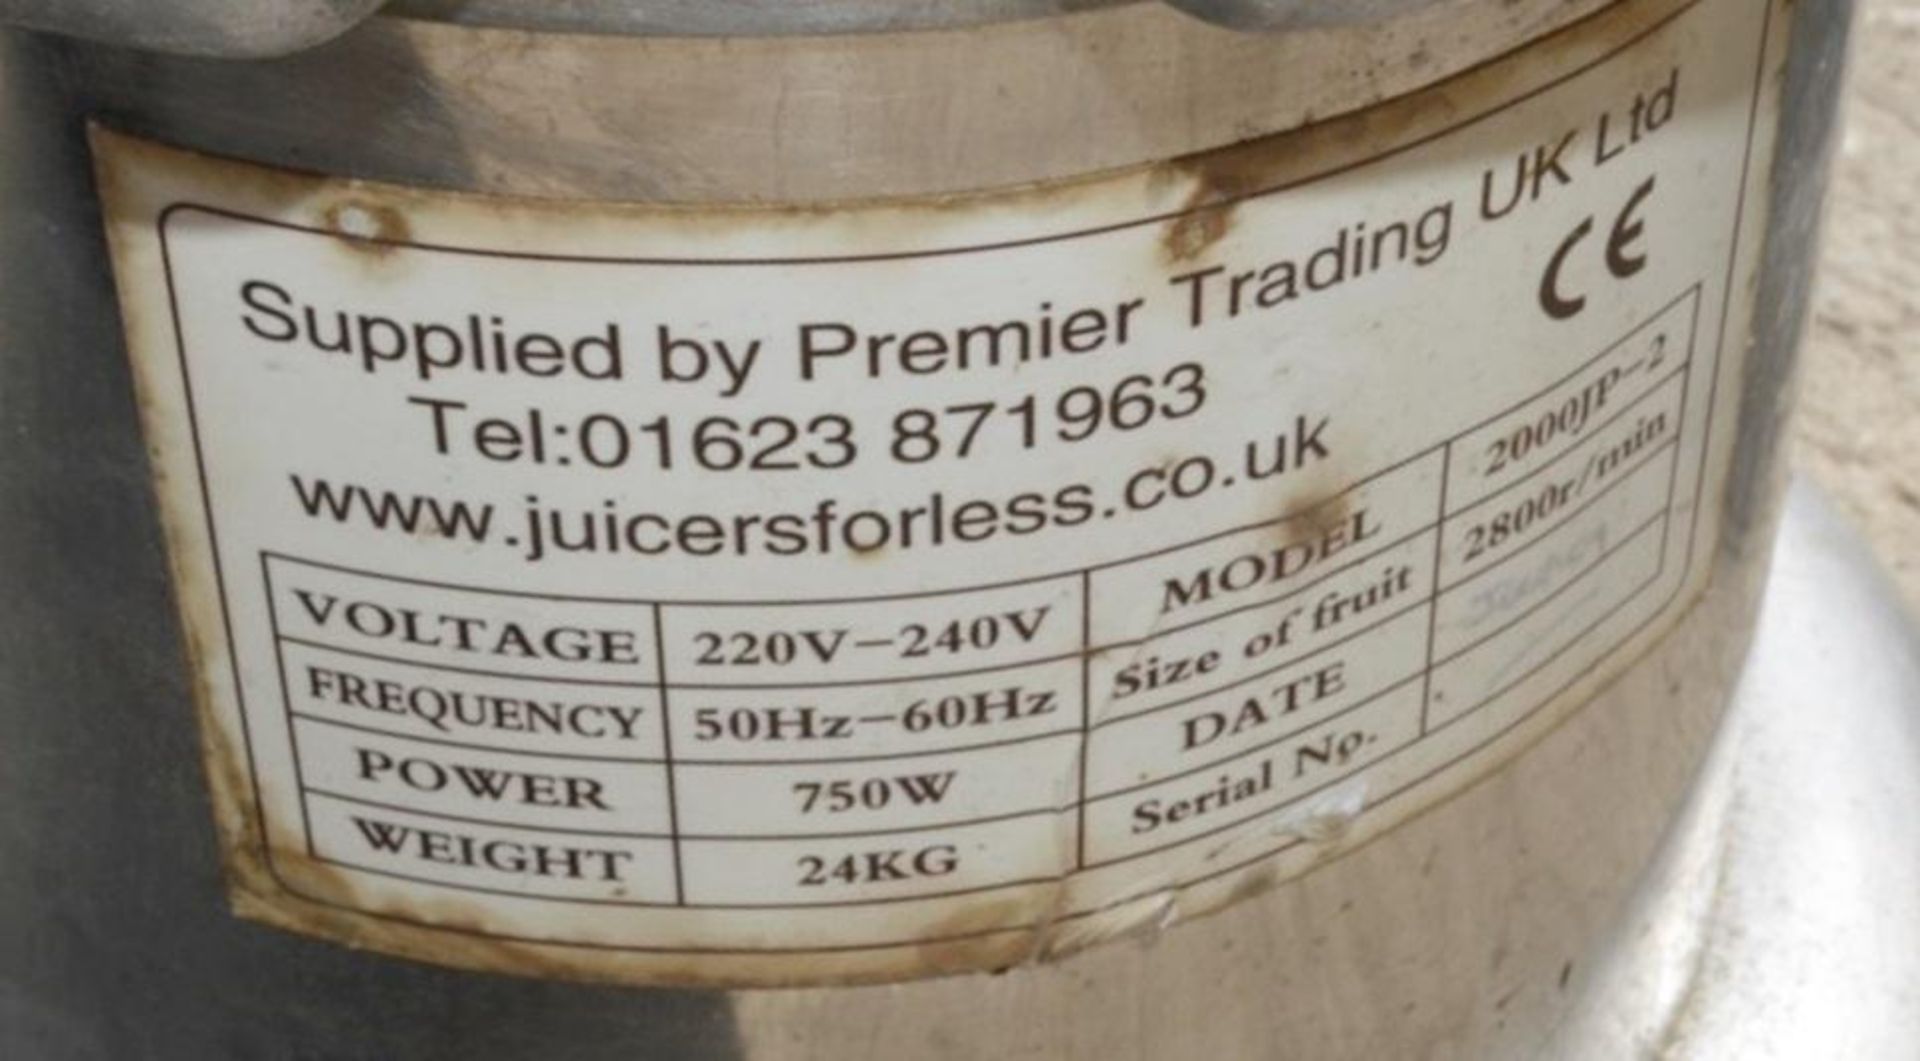 1 x ESPORANGE 2000JP Commercial Juicer Juice Maker - Pre-owned, Taken From An Asian Fusion Restauran - Image 2 of 5